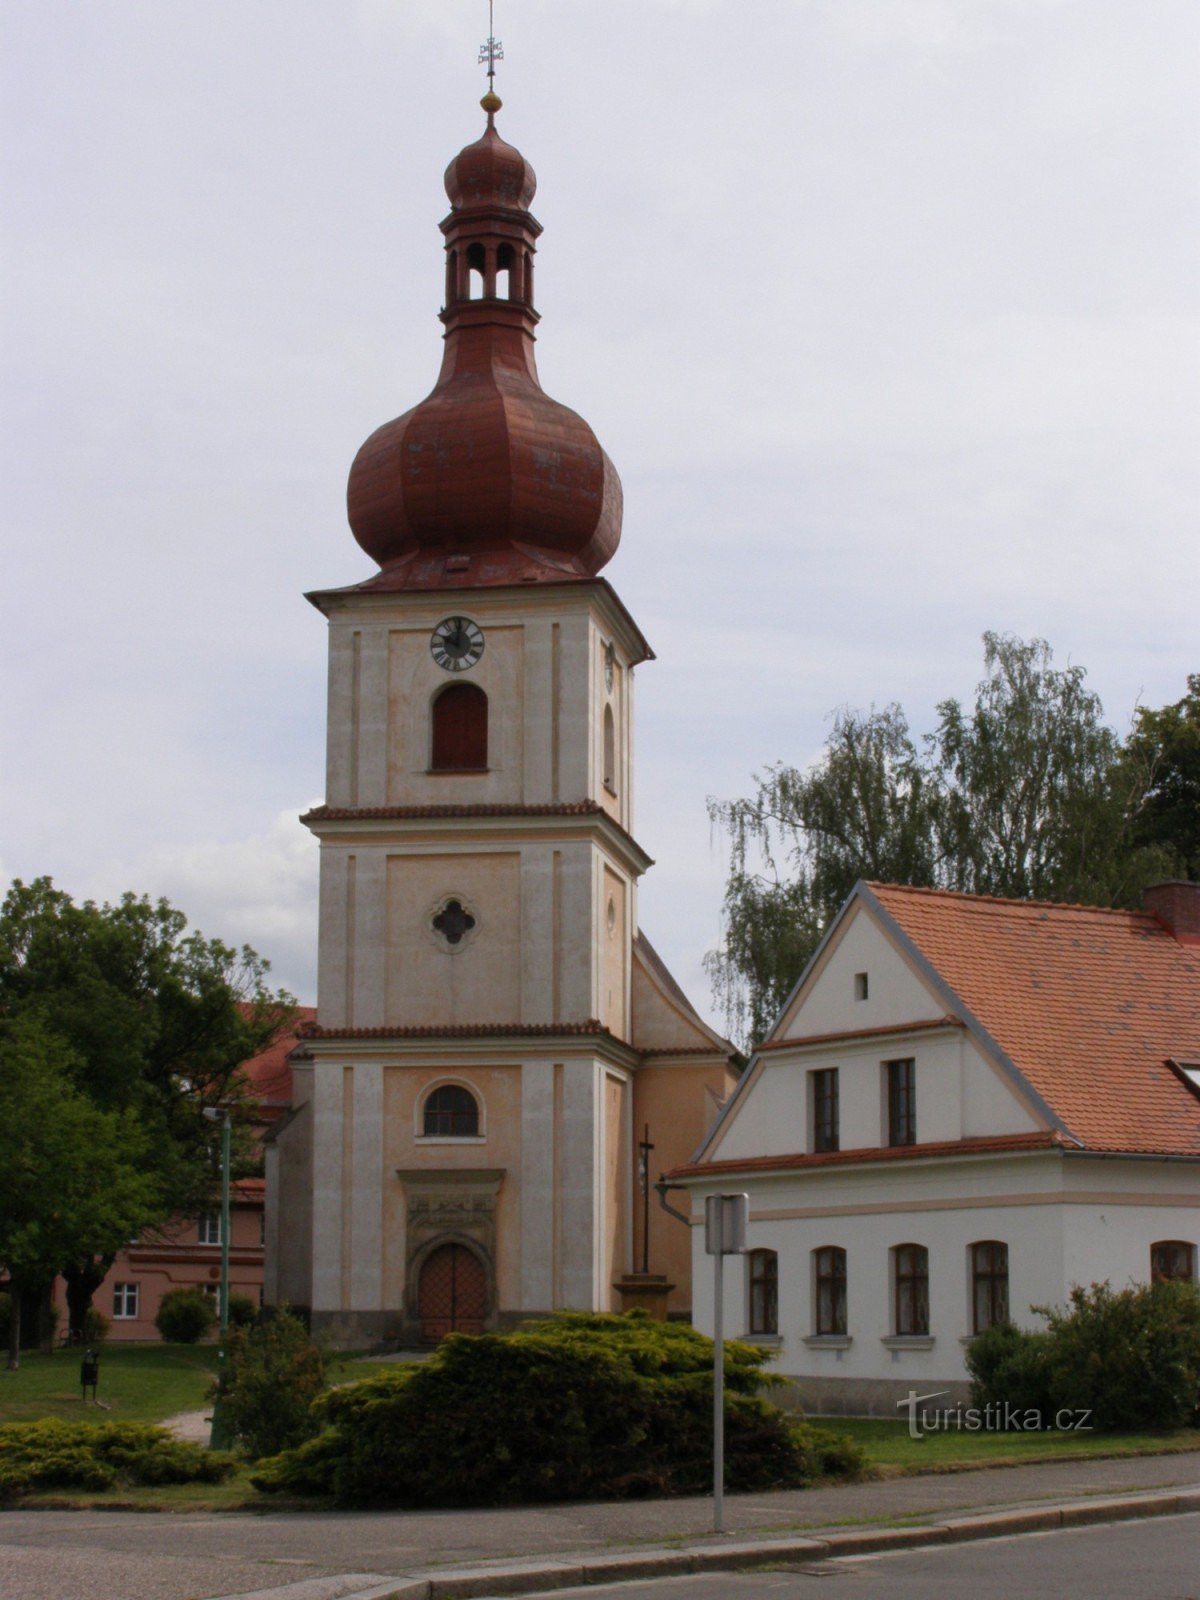 Jaroměř - kyrkan St. Jakub